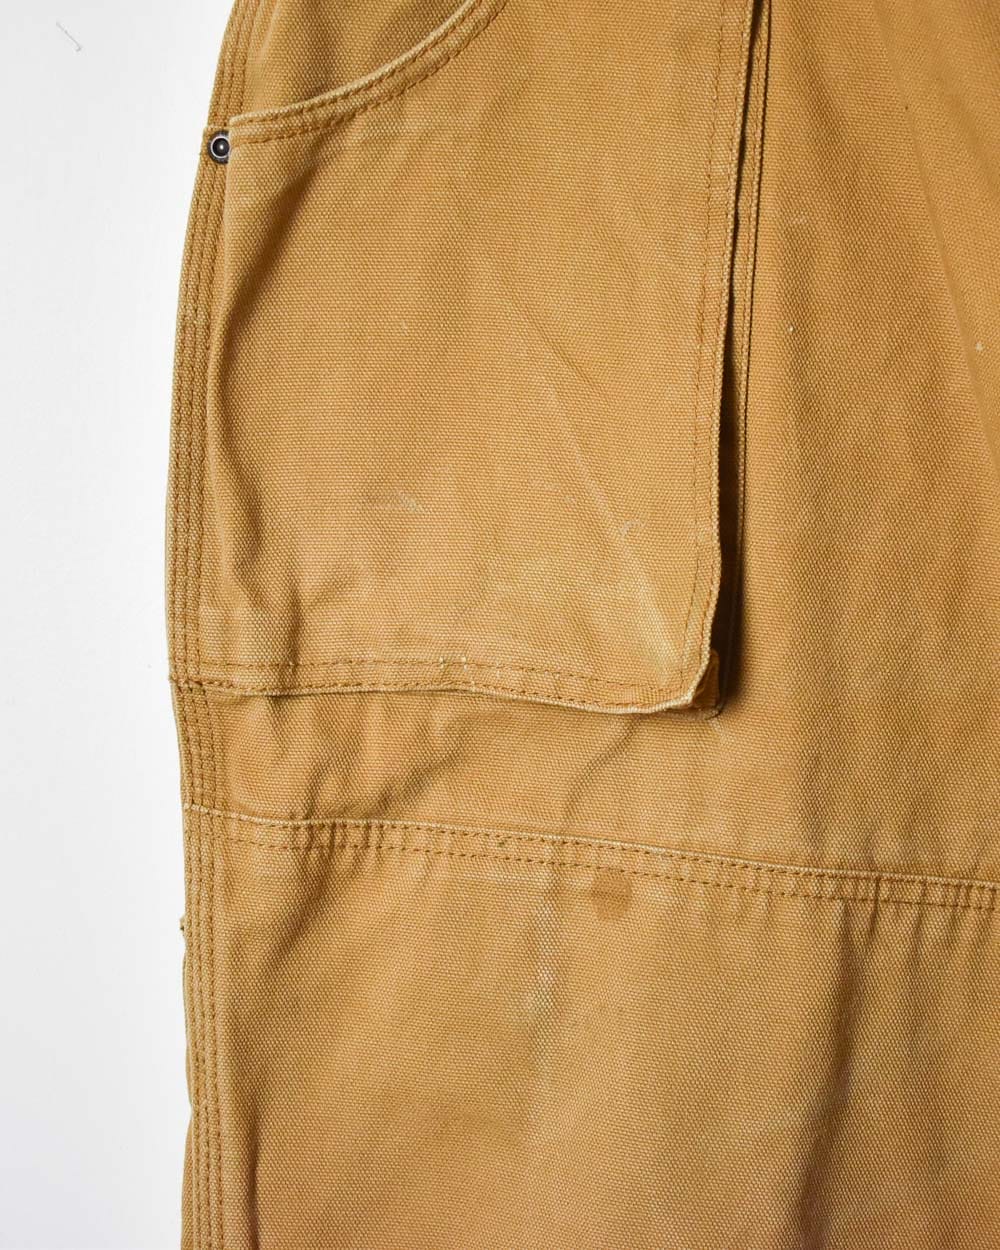 Neutral Dickies Worn Double Knee Jeans - W38 L30